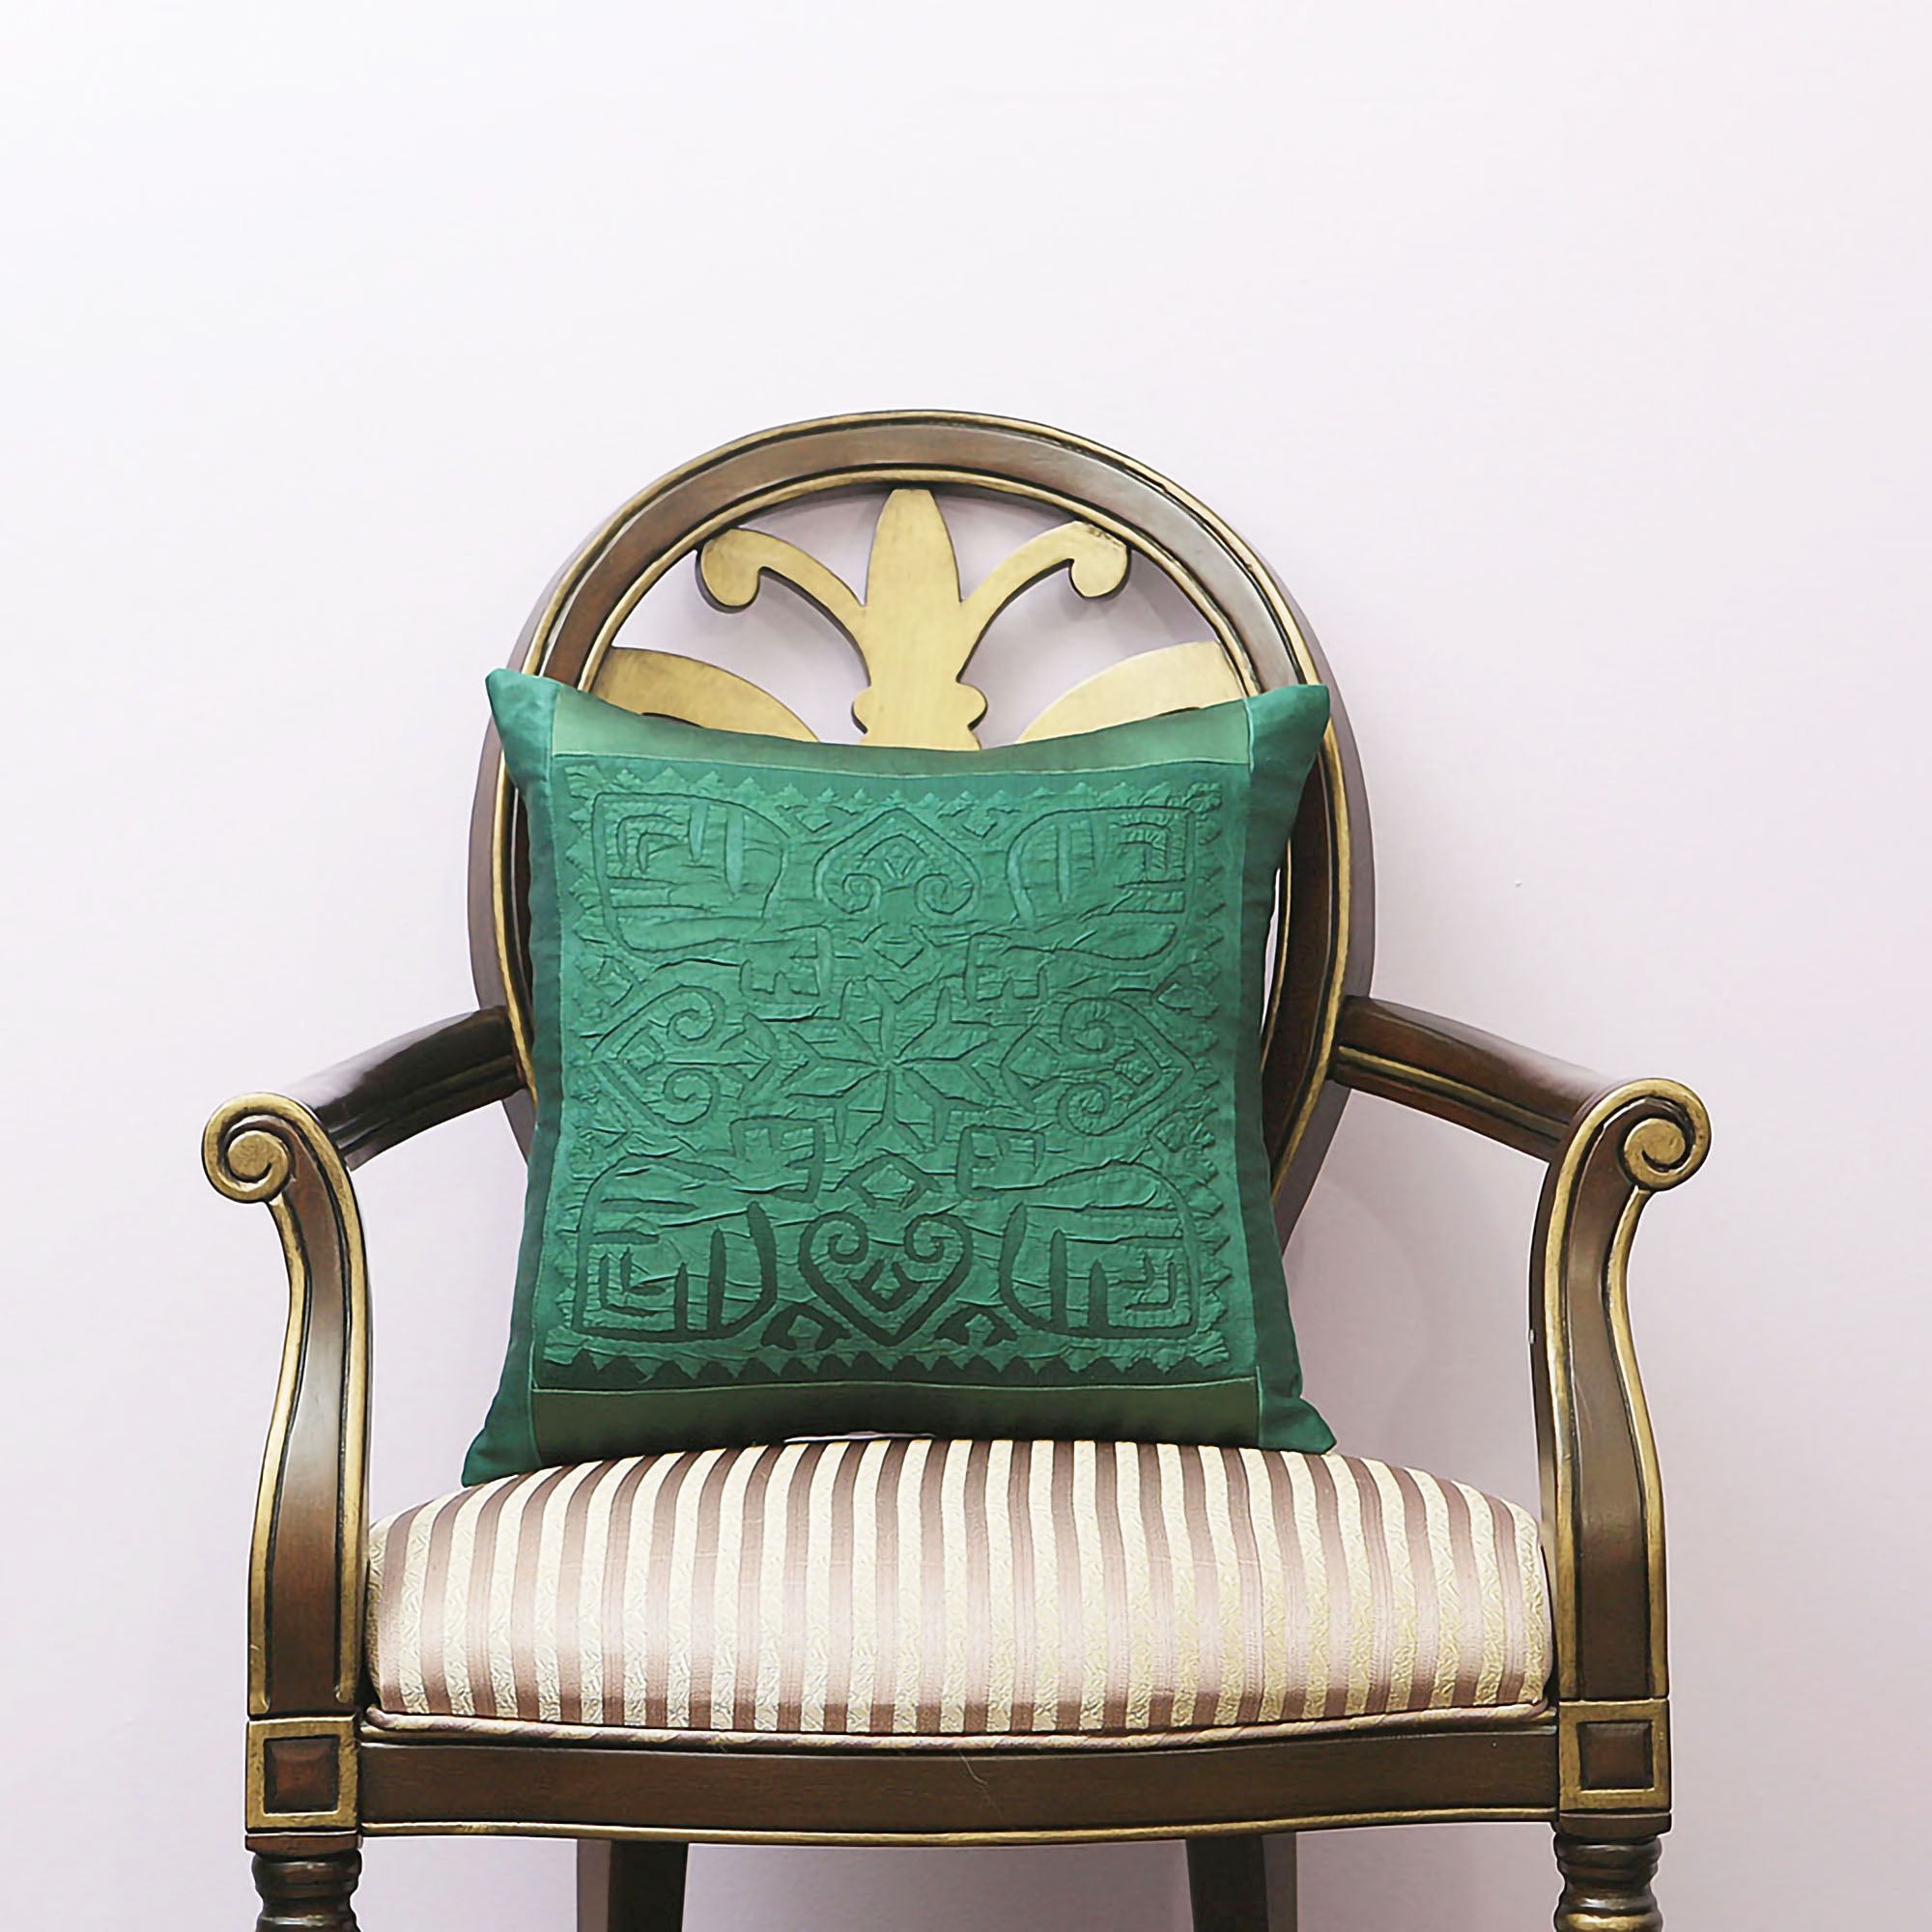 Handmade Rilli Applique Satin  Decorative Throw Pillow & Cushion Cover 18 x 18 inches Green Rilli